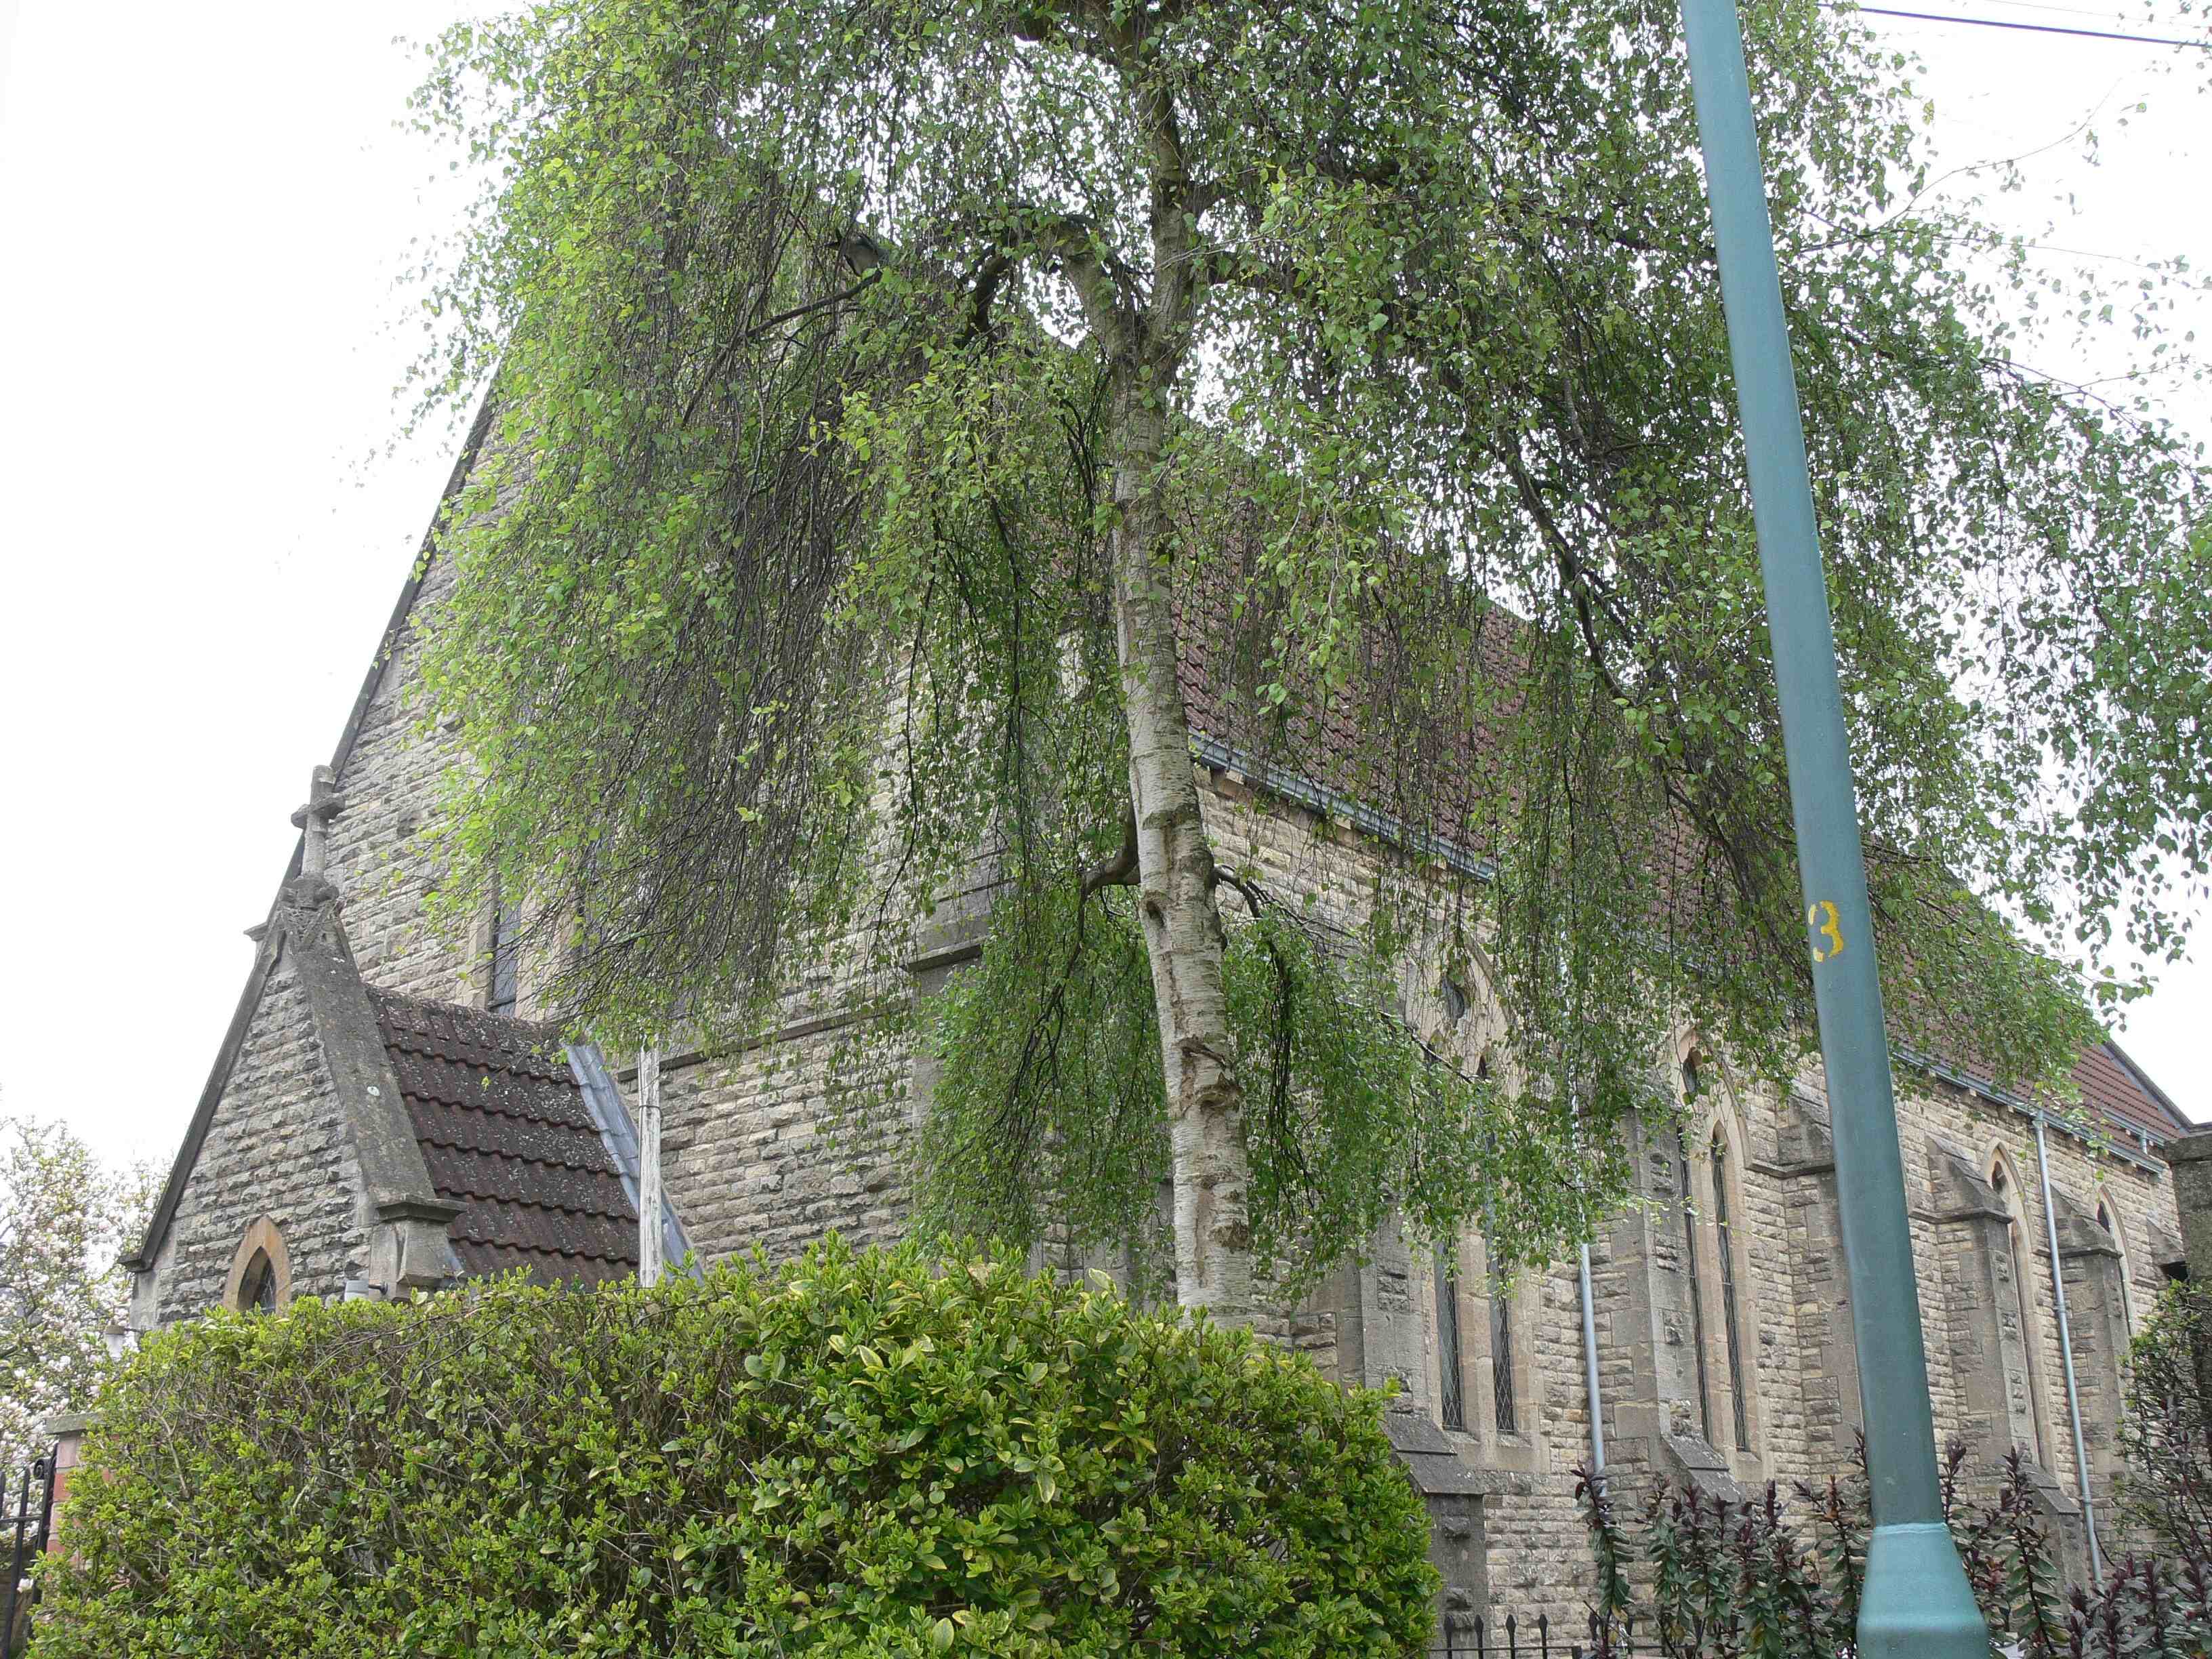 1 St Peter's Church 154